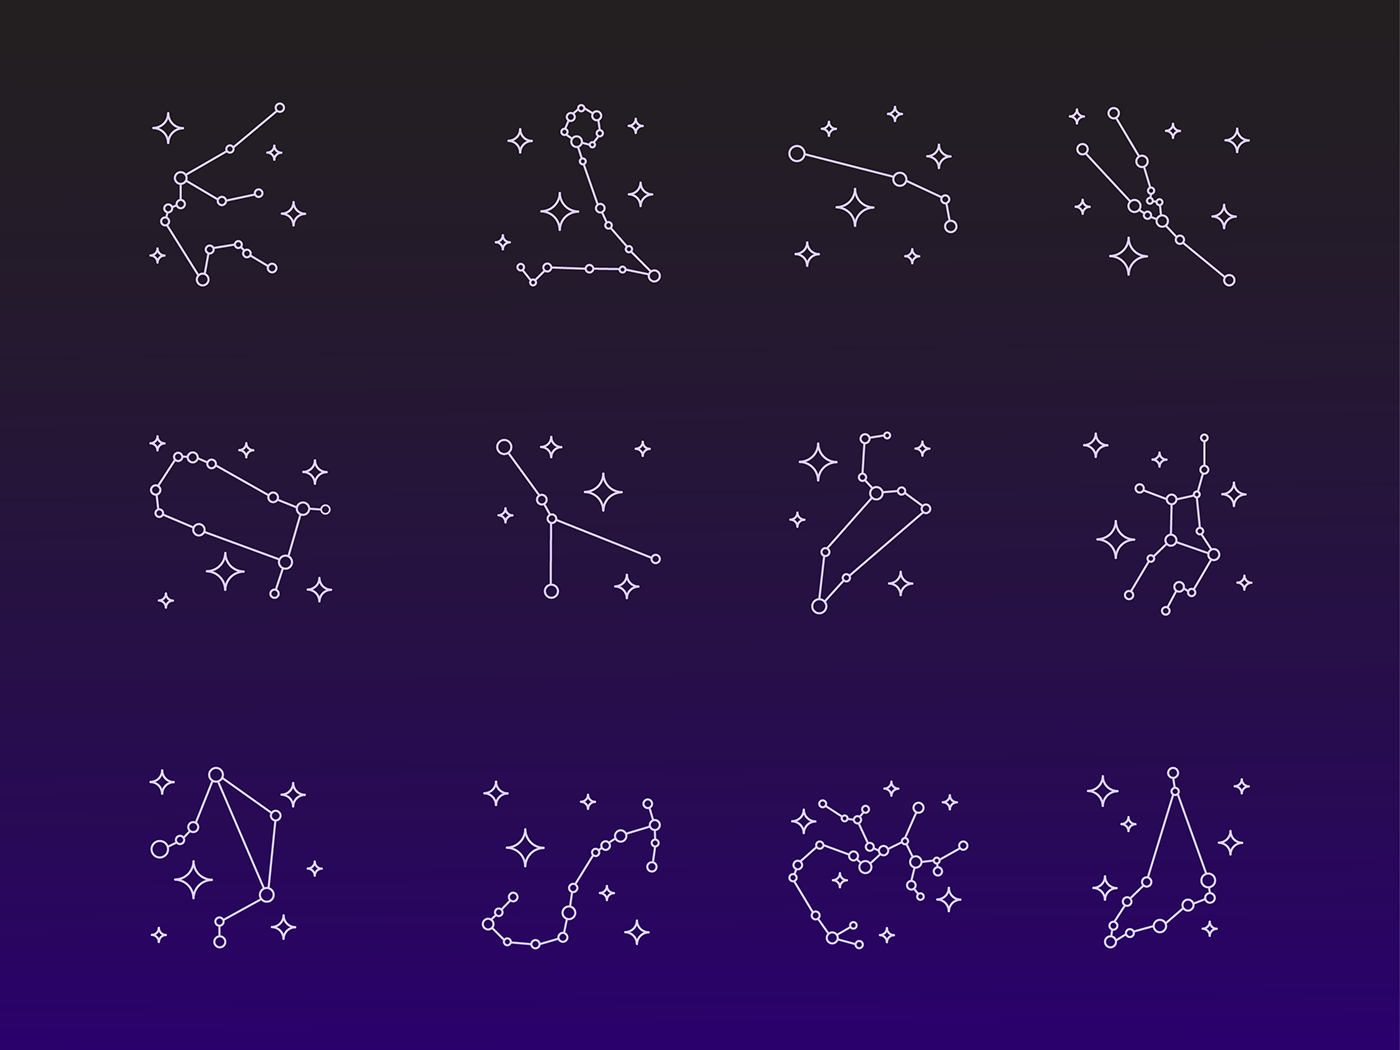 Созвездие объяснение. Созвездия. Созвездие рисунок. Созвездия знаков зодиака. Зодиакальные созвездия символы.